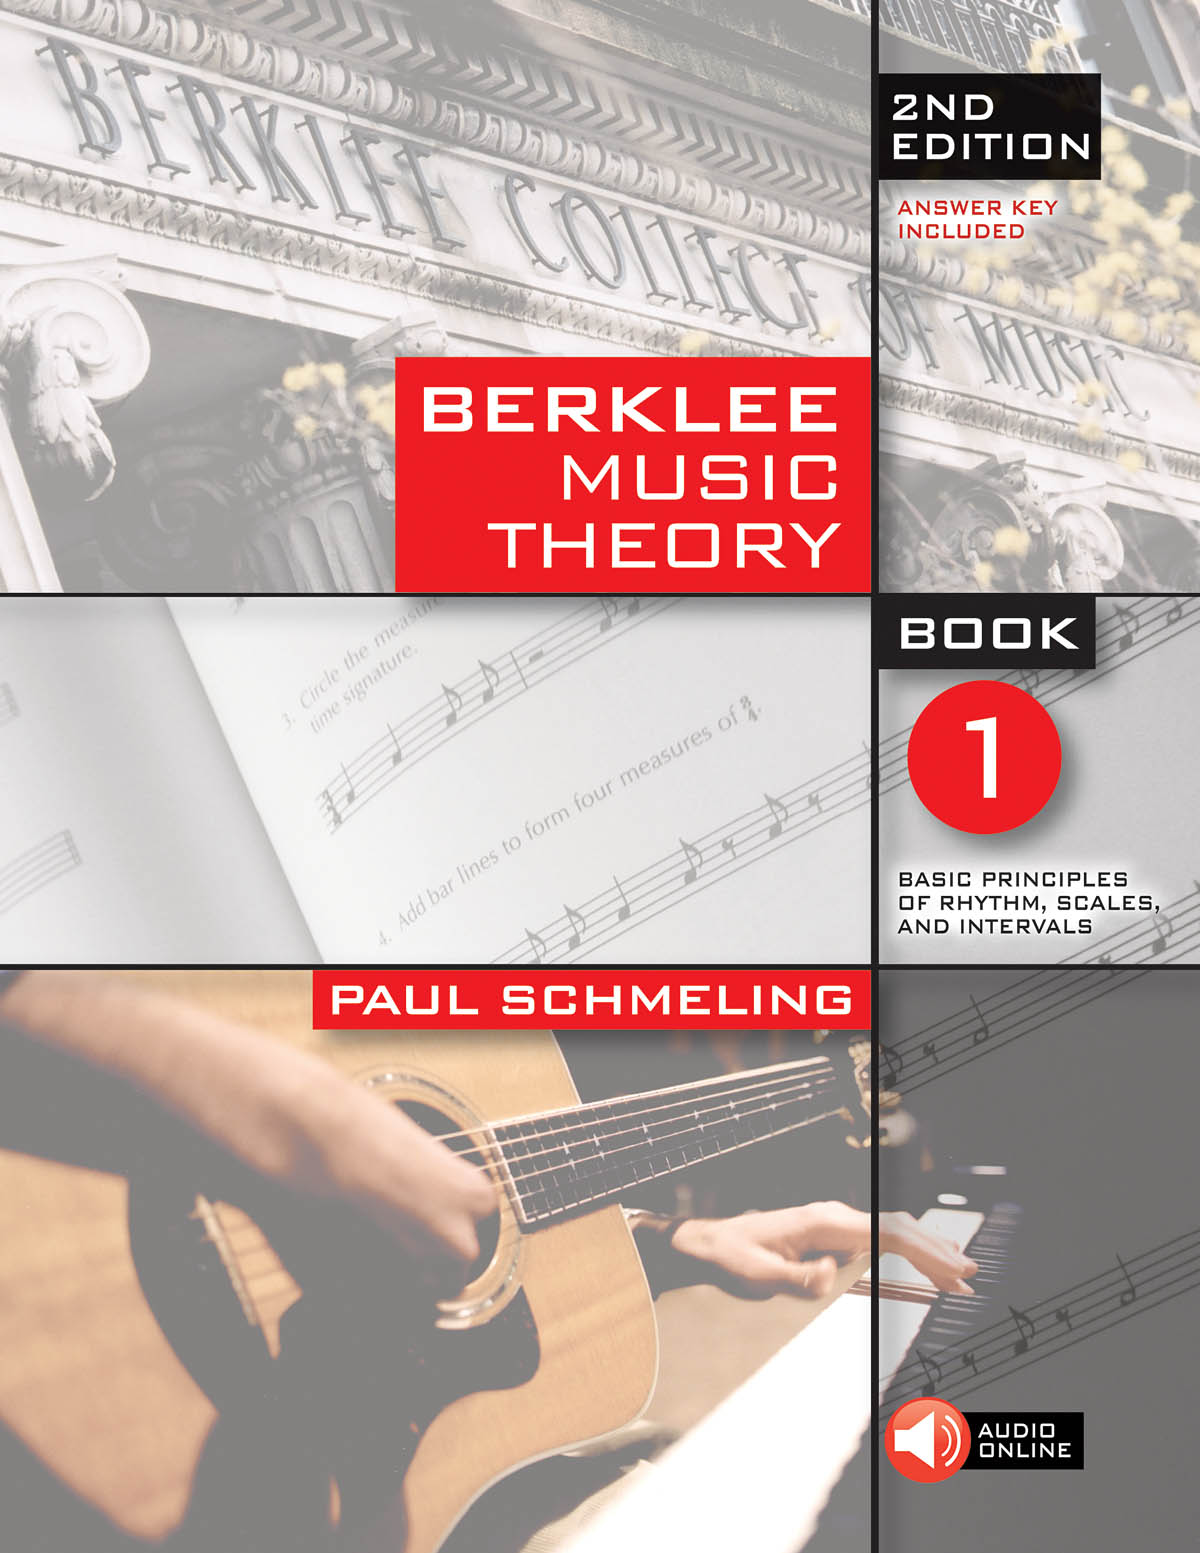 Berklee Music Theory Book 1 - 2nd Edition: Theory